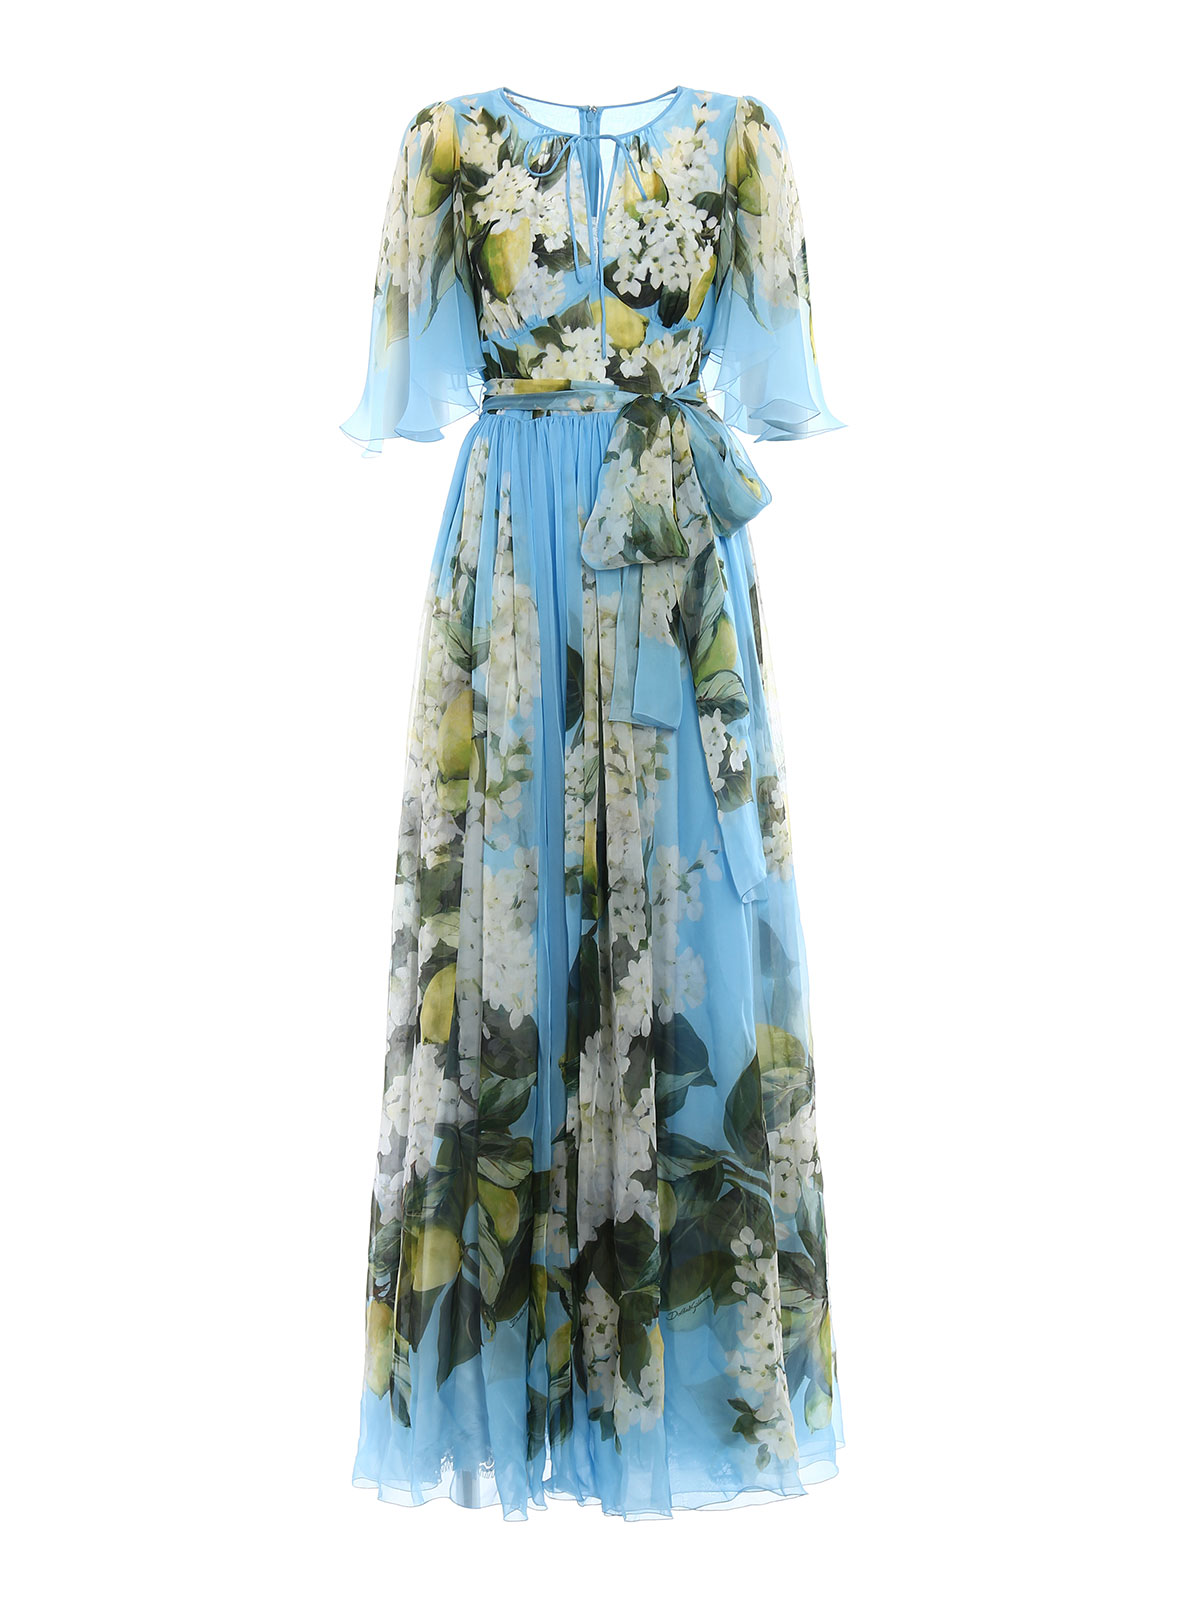 dolce and gabbana blue floral dress